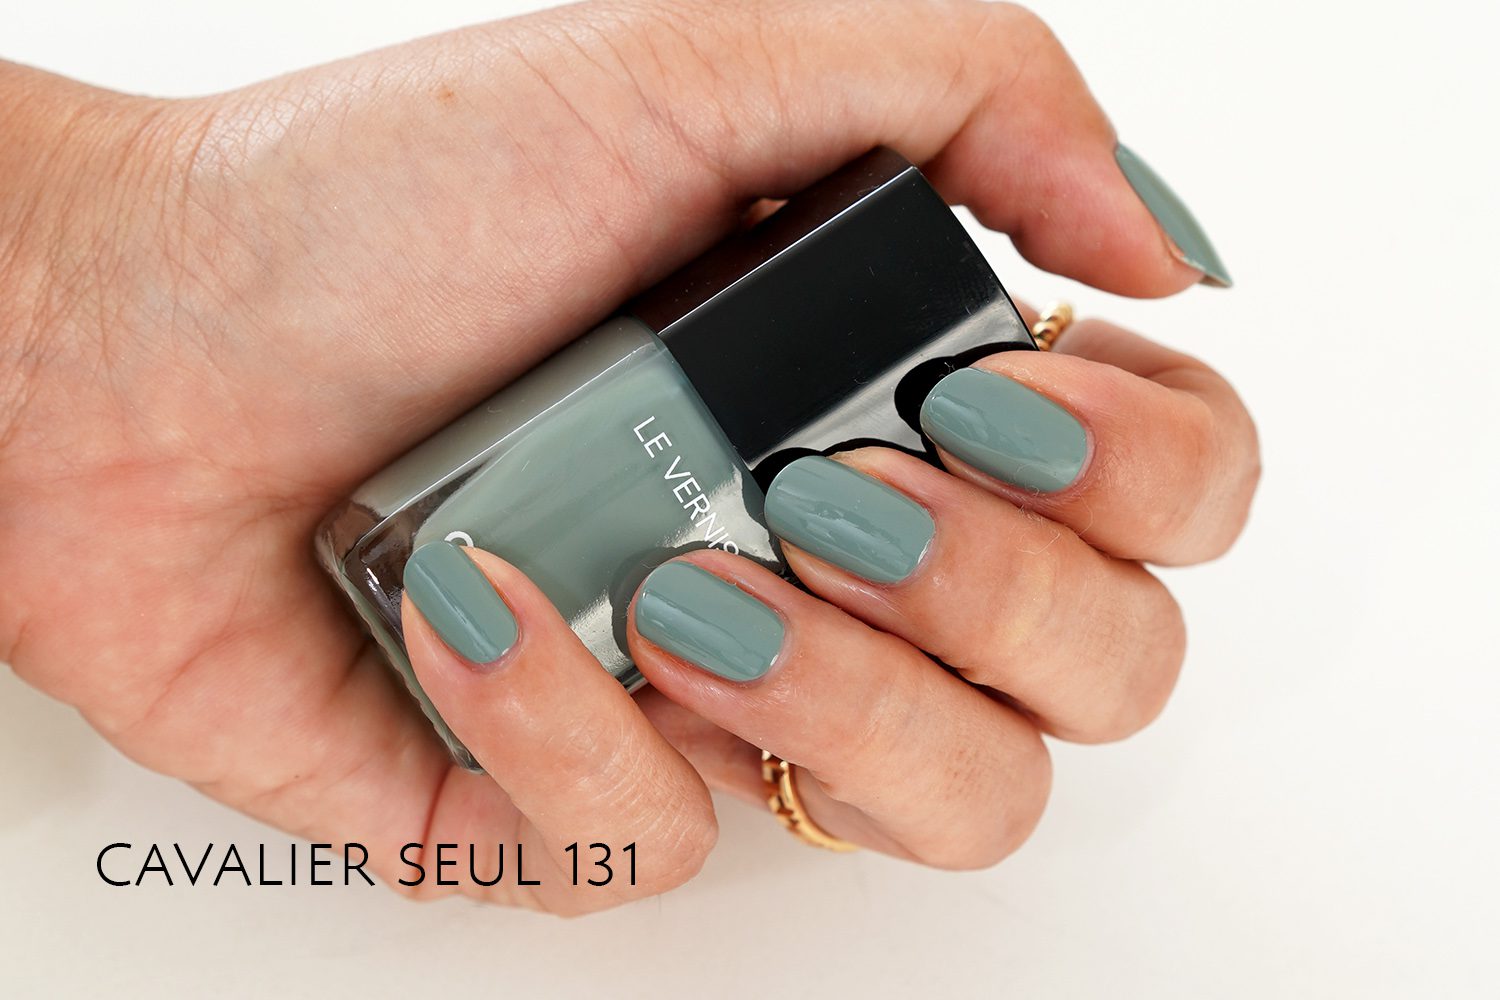 Chanel Fugueuse nail polish review – Bay Area Fashionista